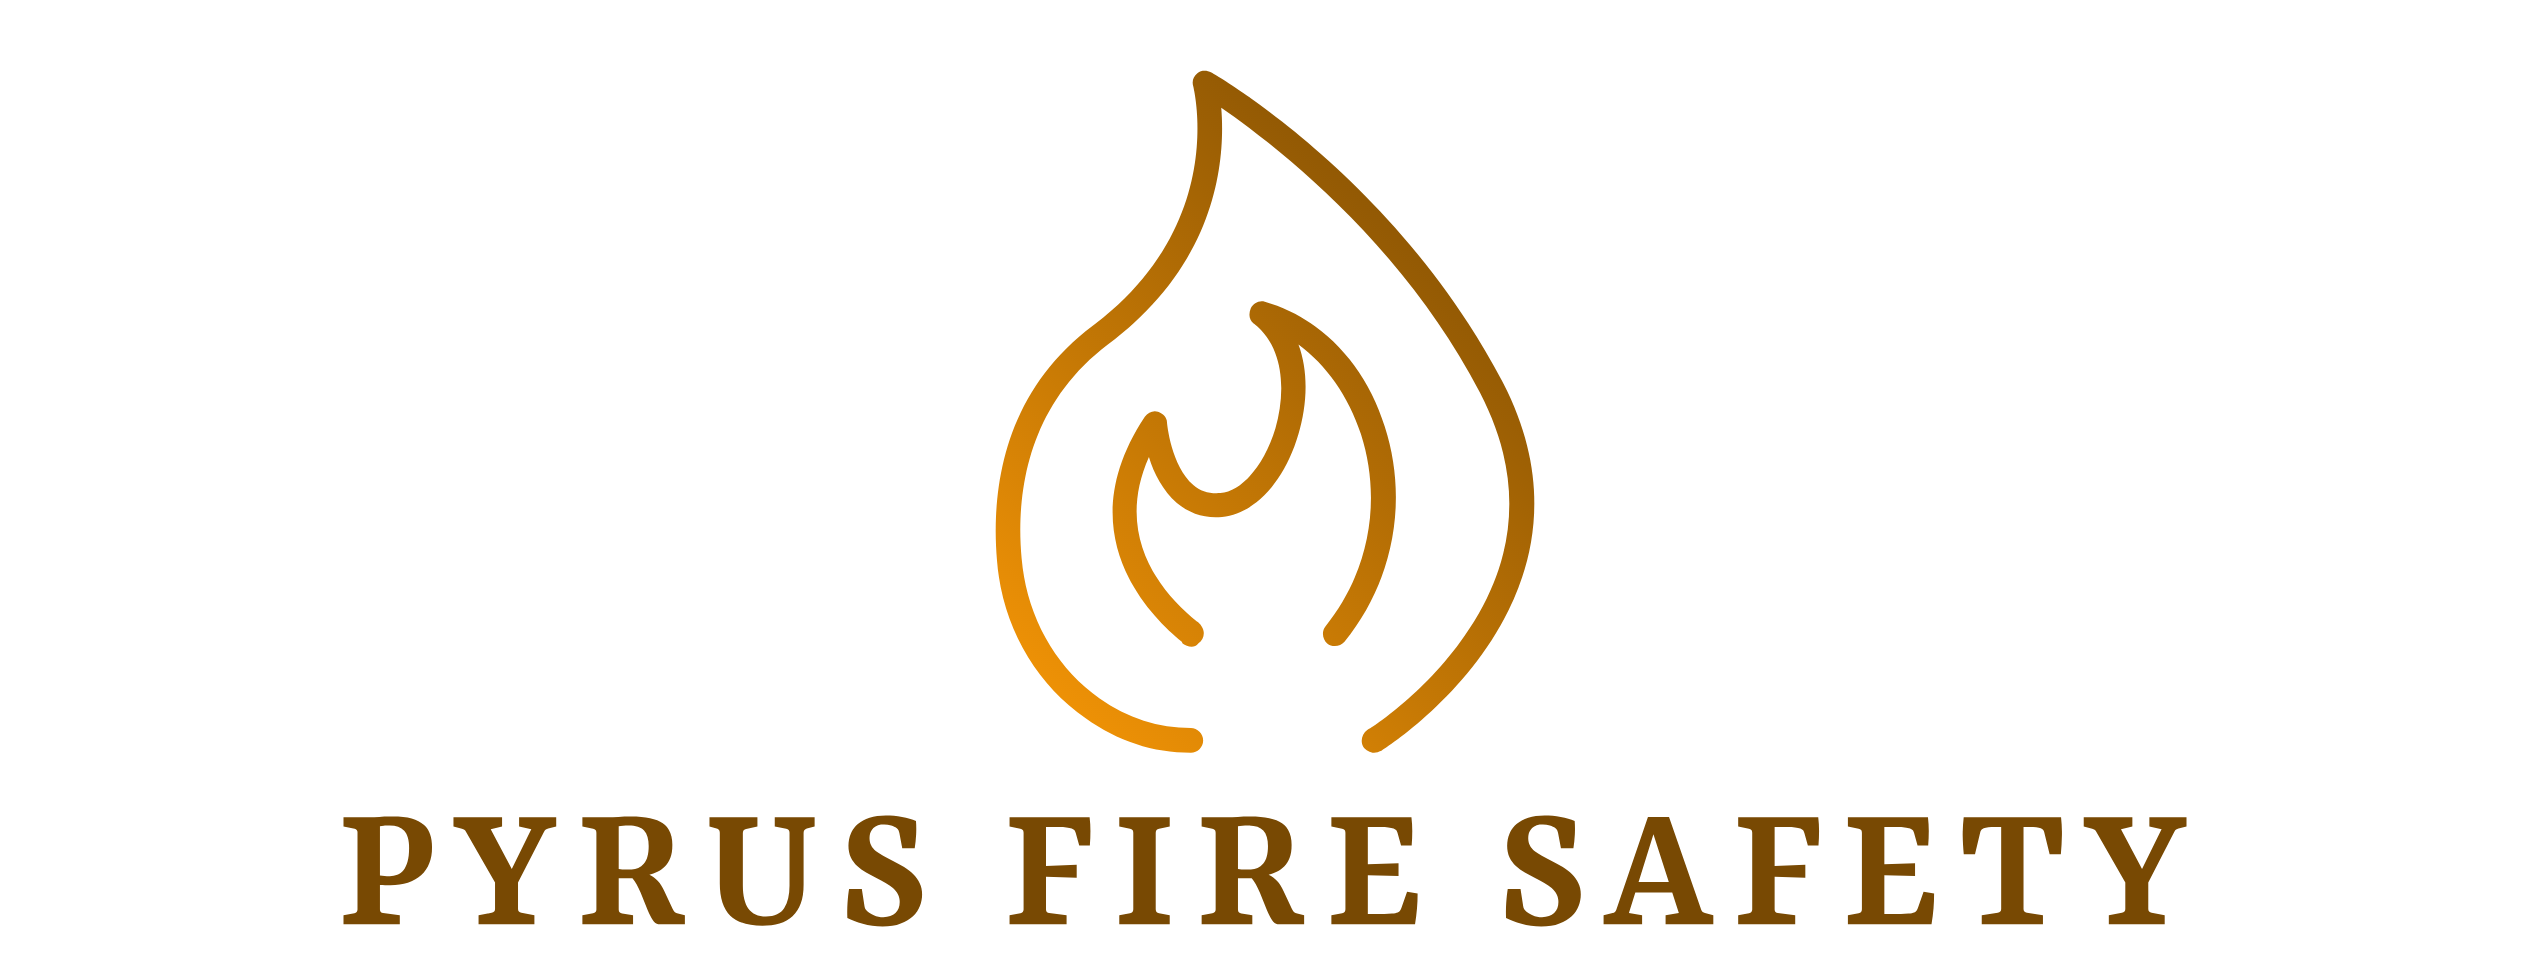 PYRUS fire safety logo